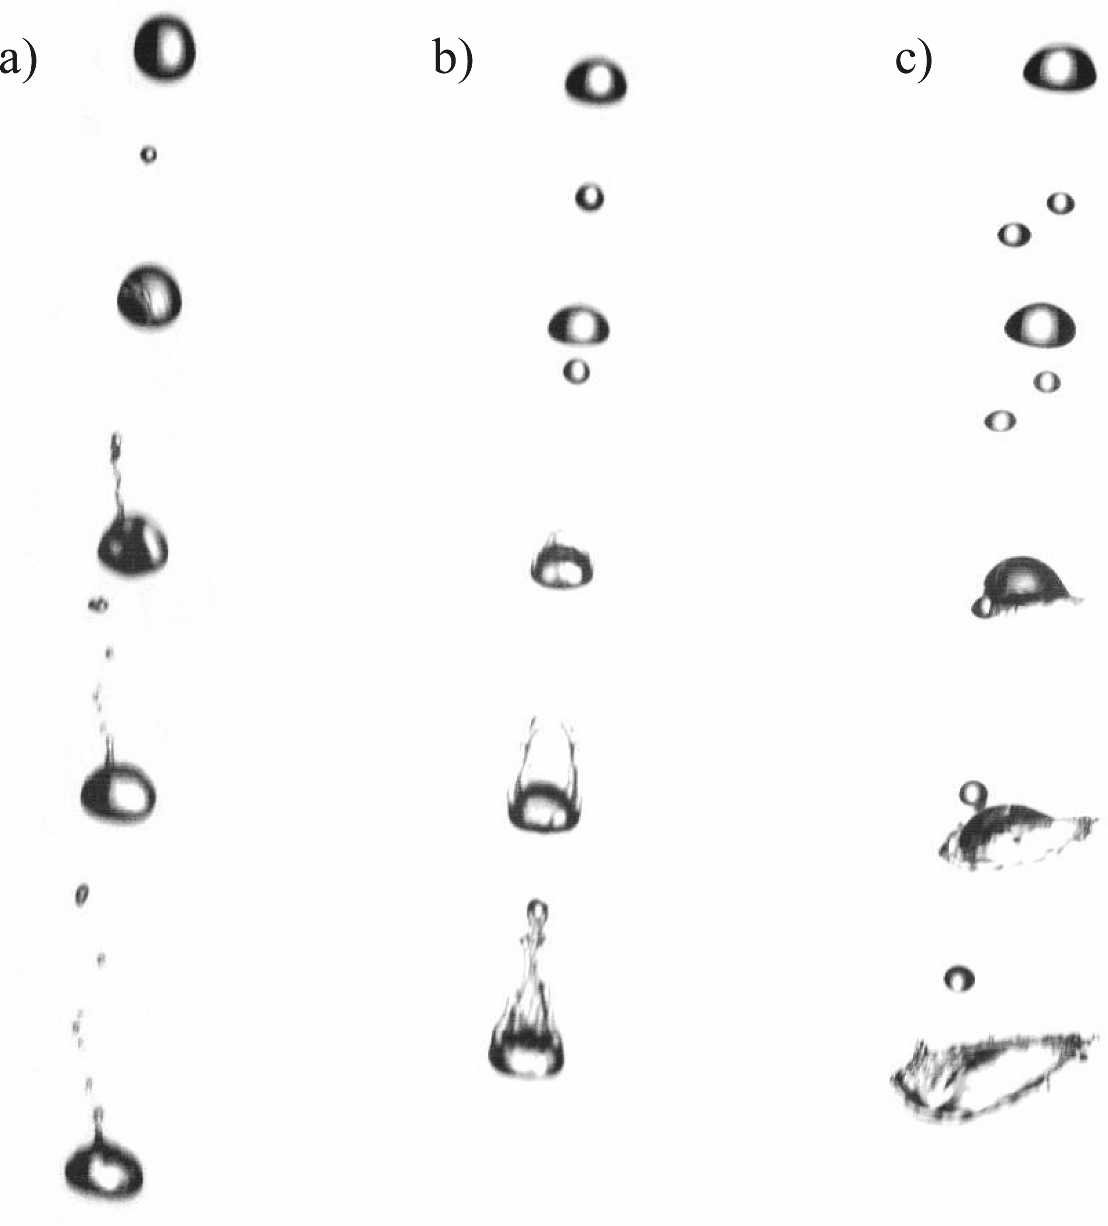 Types of raindrops.jpg